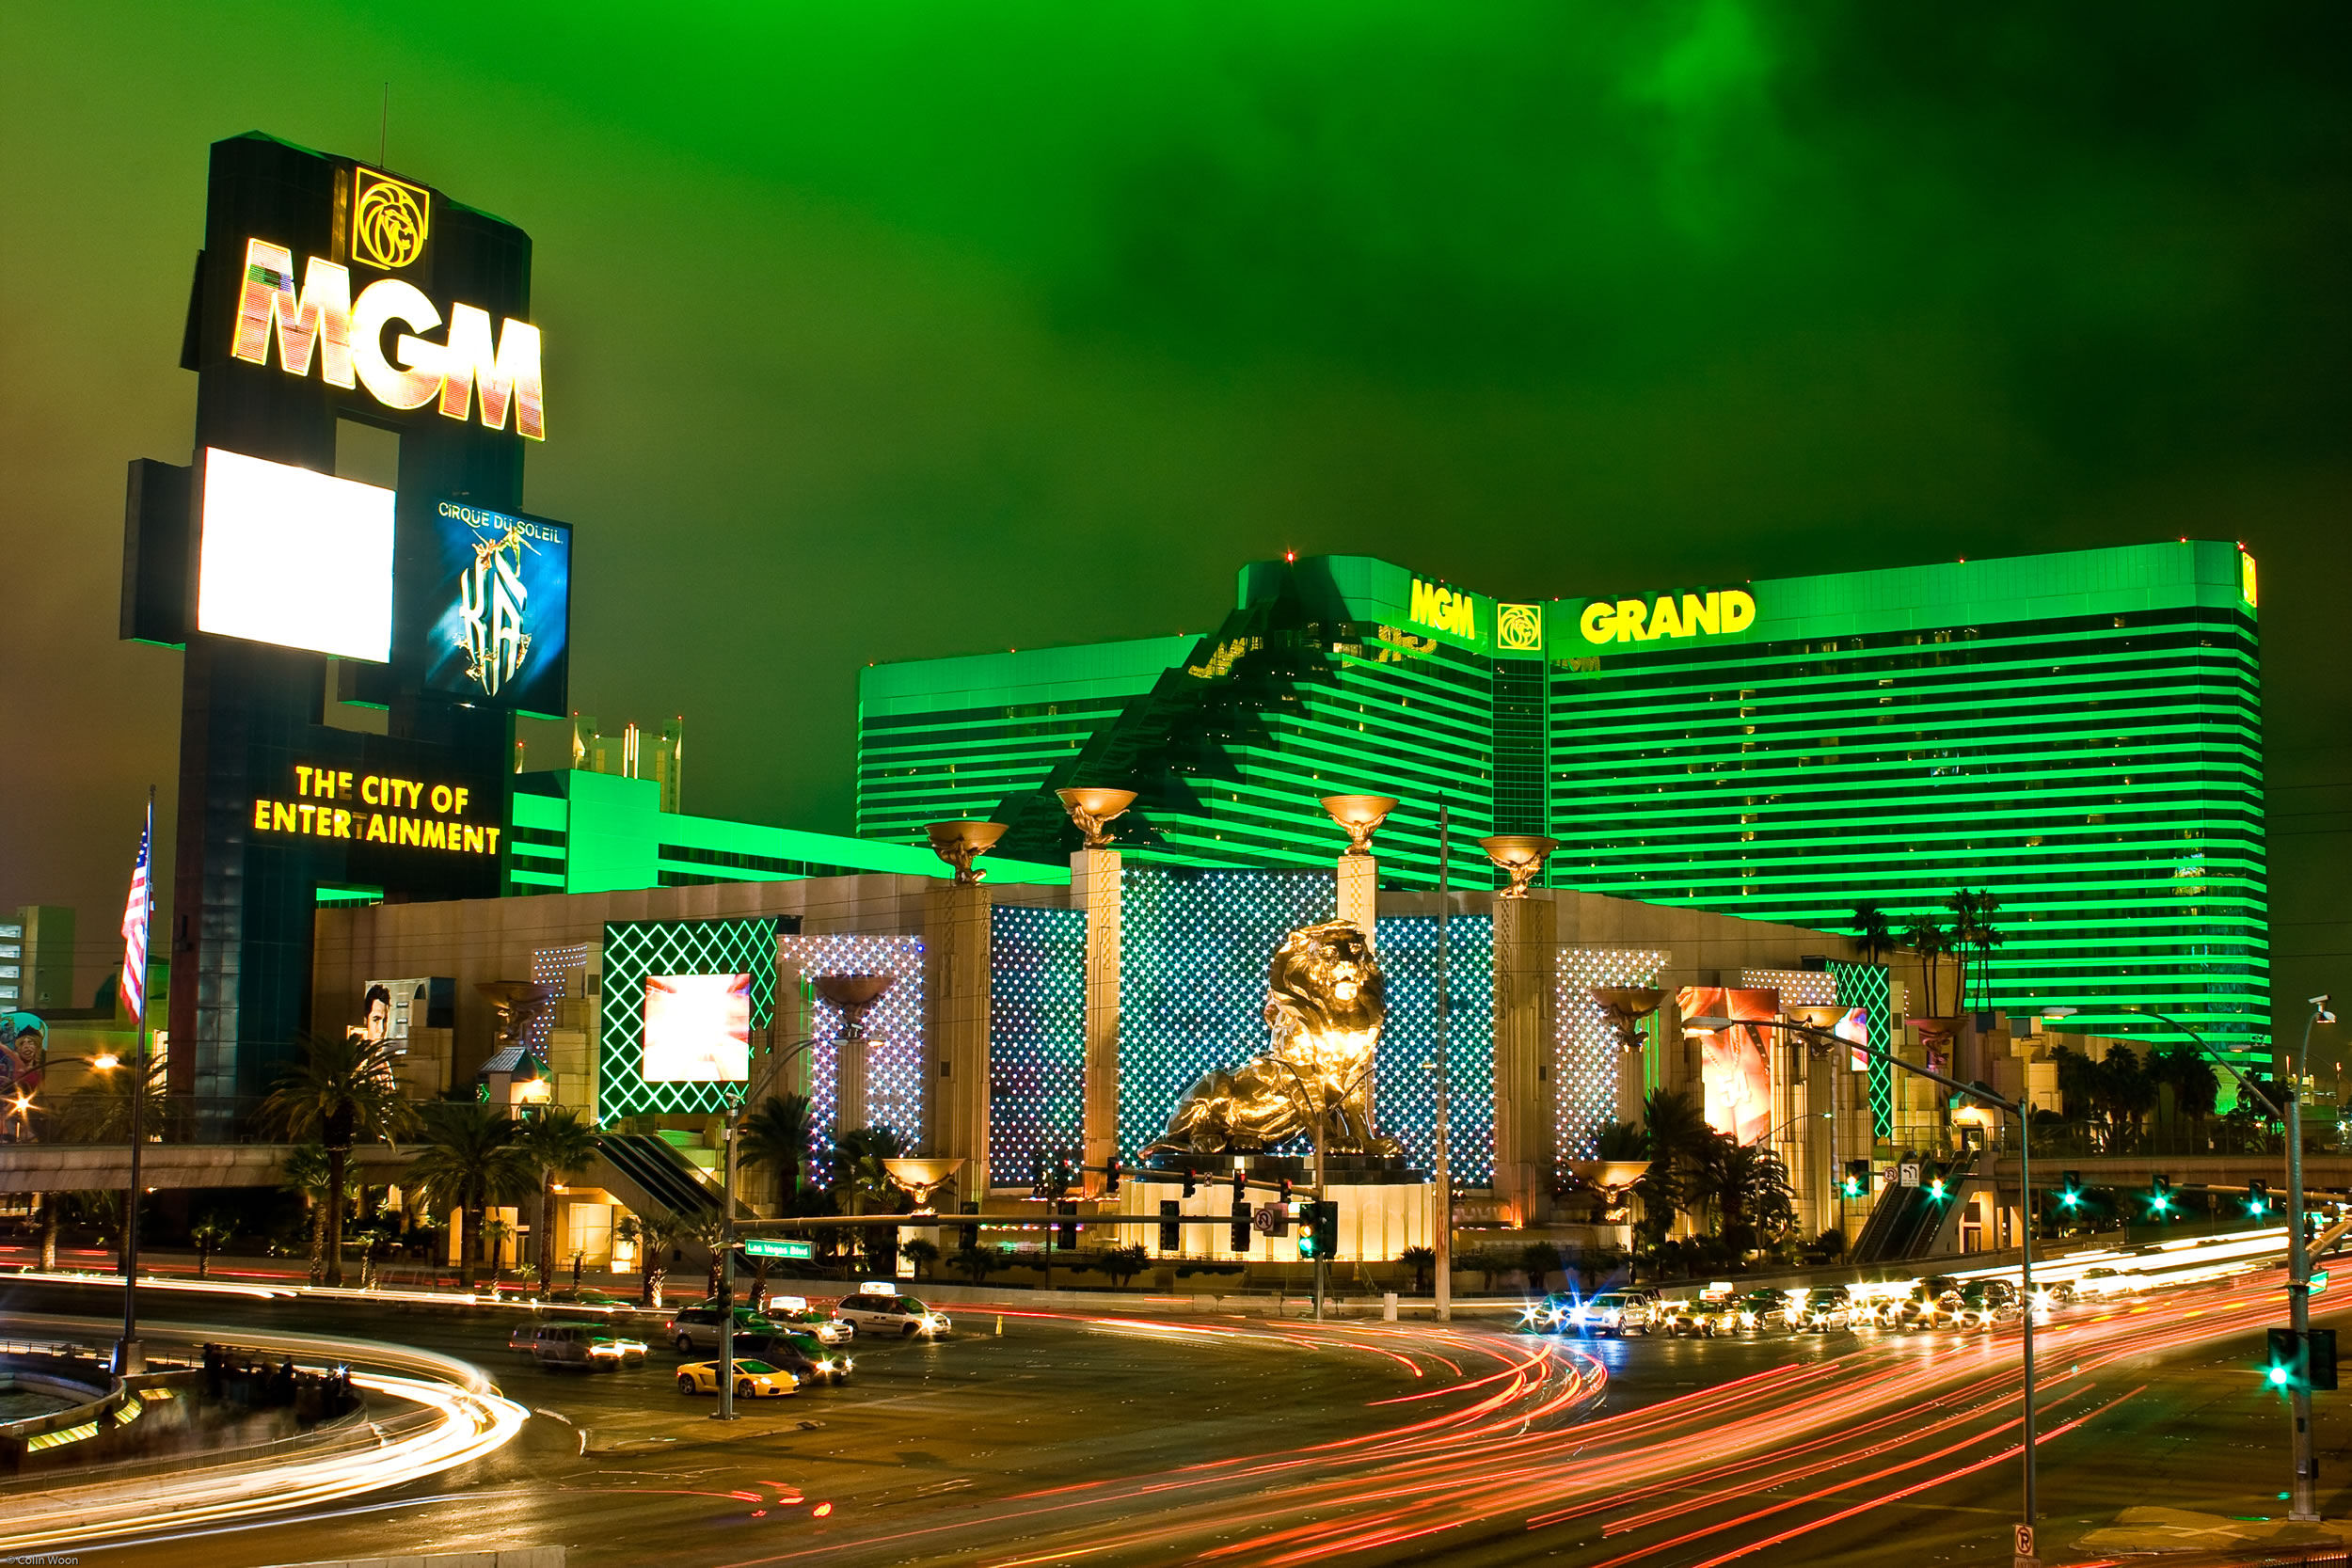 mgm grand hotel casino